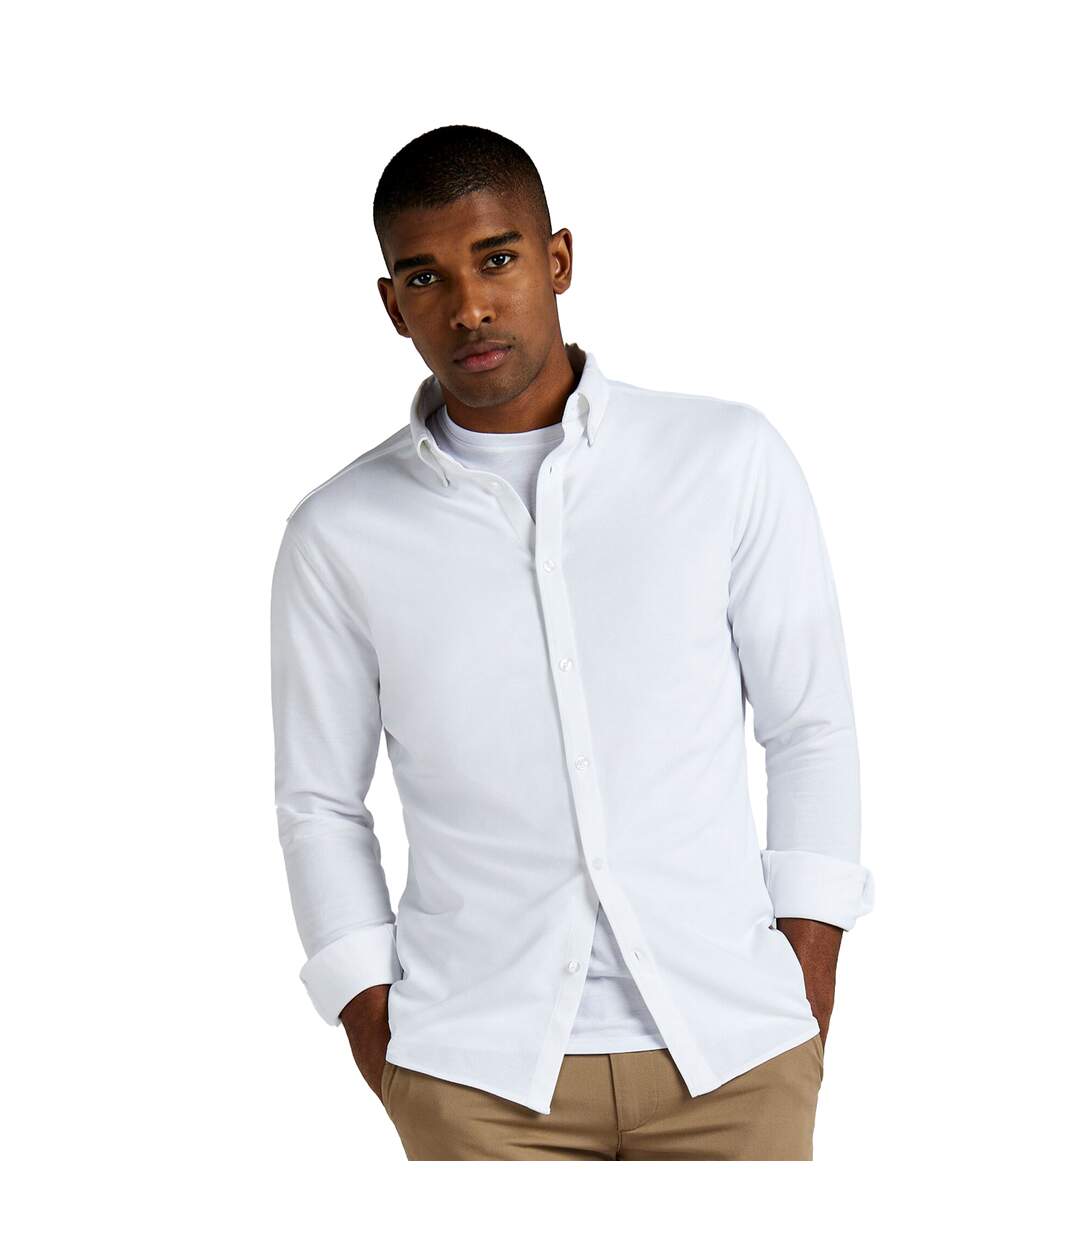 Kustom Kit Mens Superwash 60°C Tailored Long-Sleeved Shirt (White)